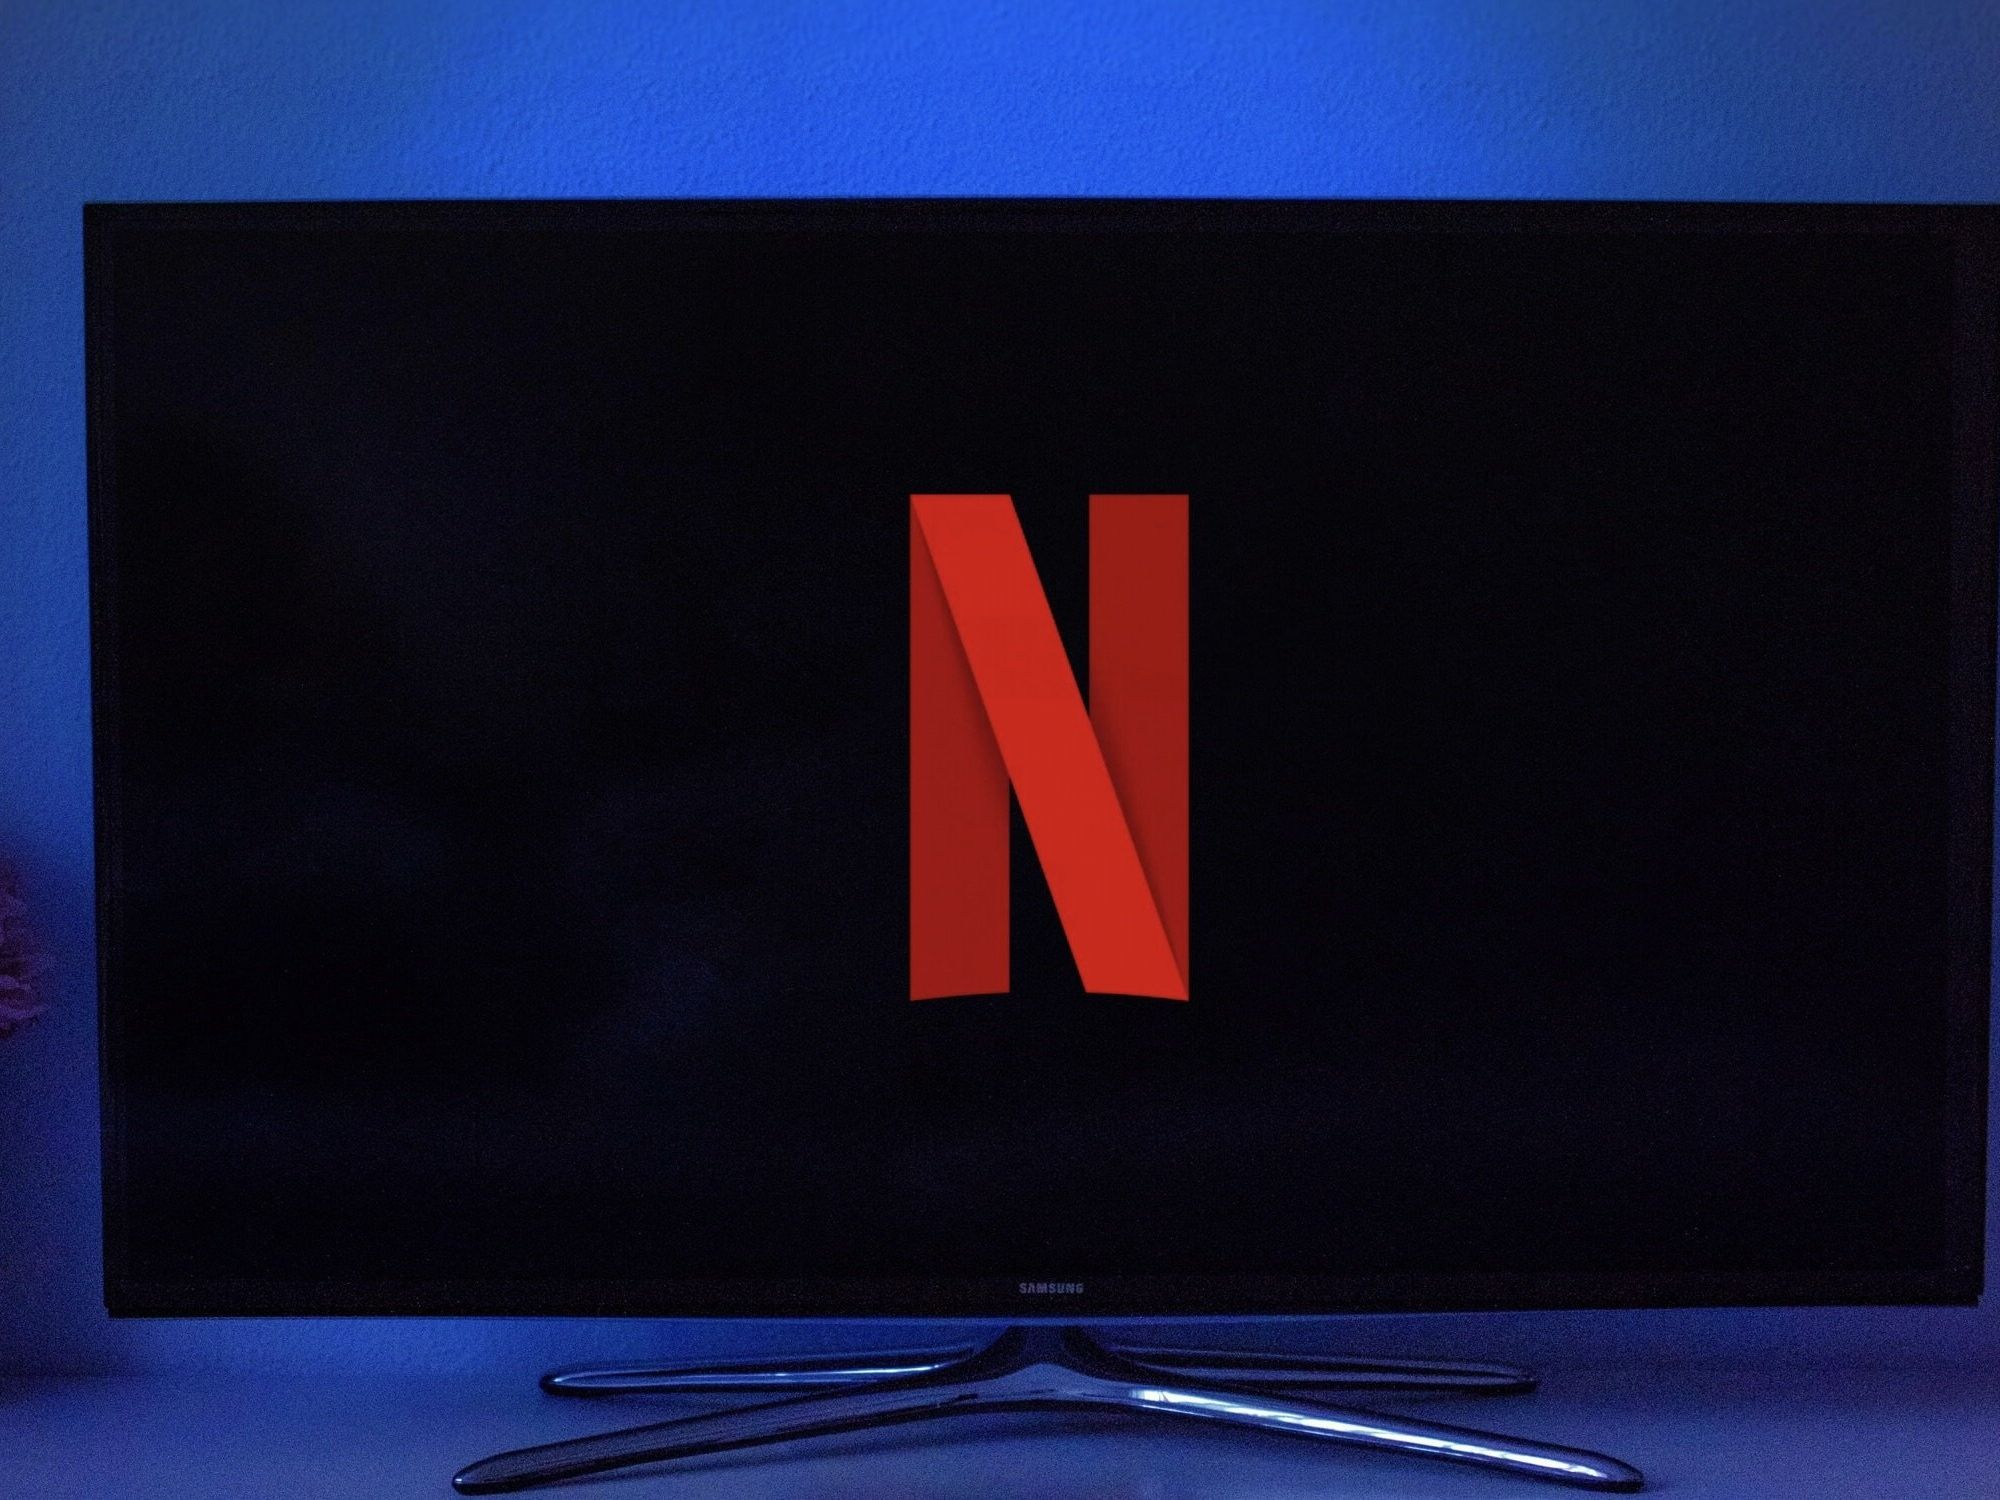 Netflix Half-Time Report 2022: Quality vs. Quantity and Biggest